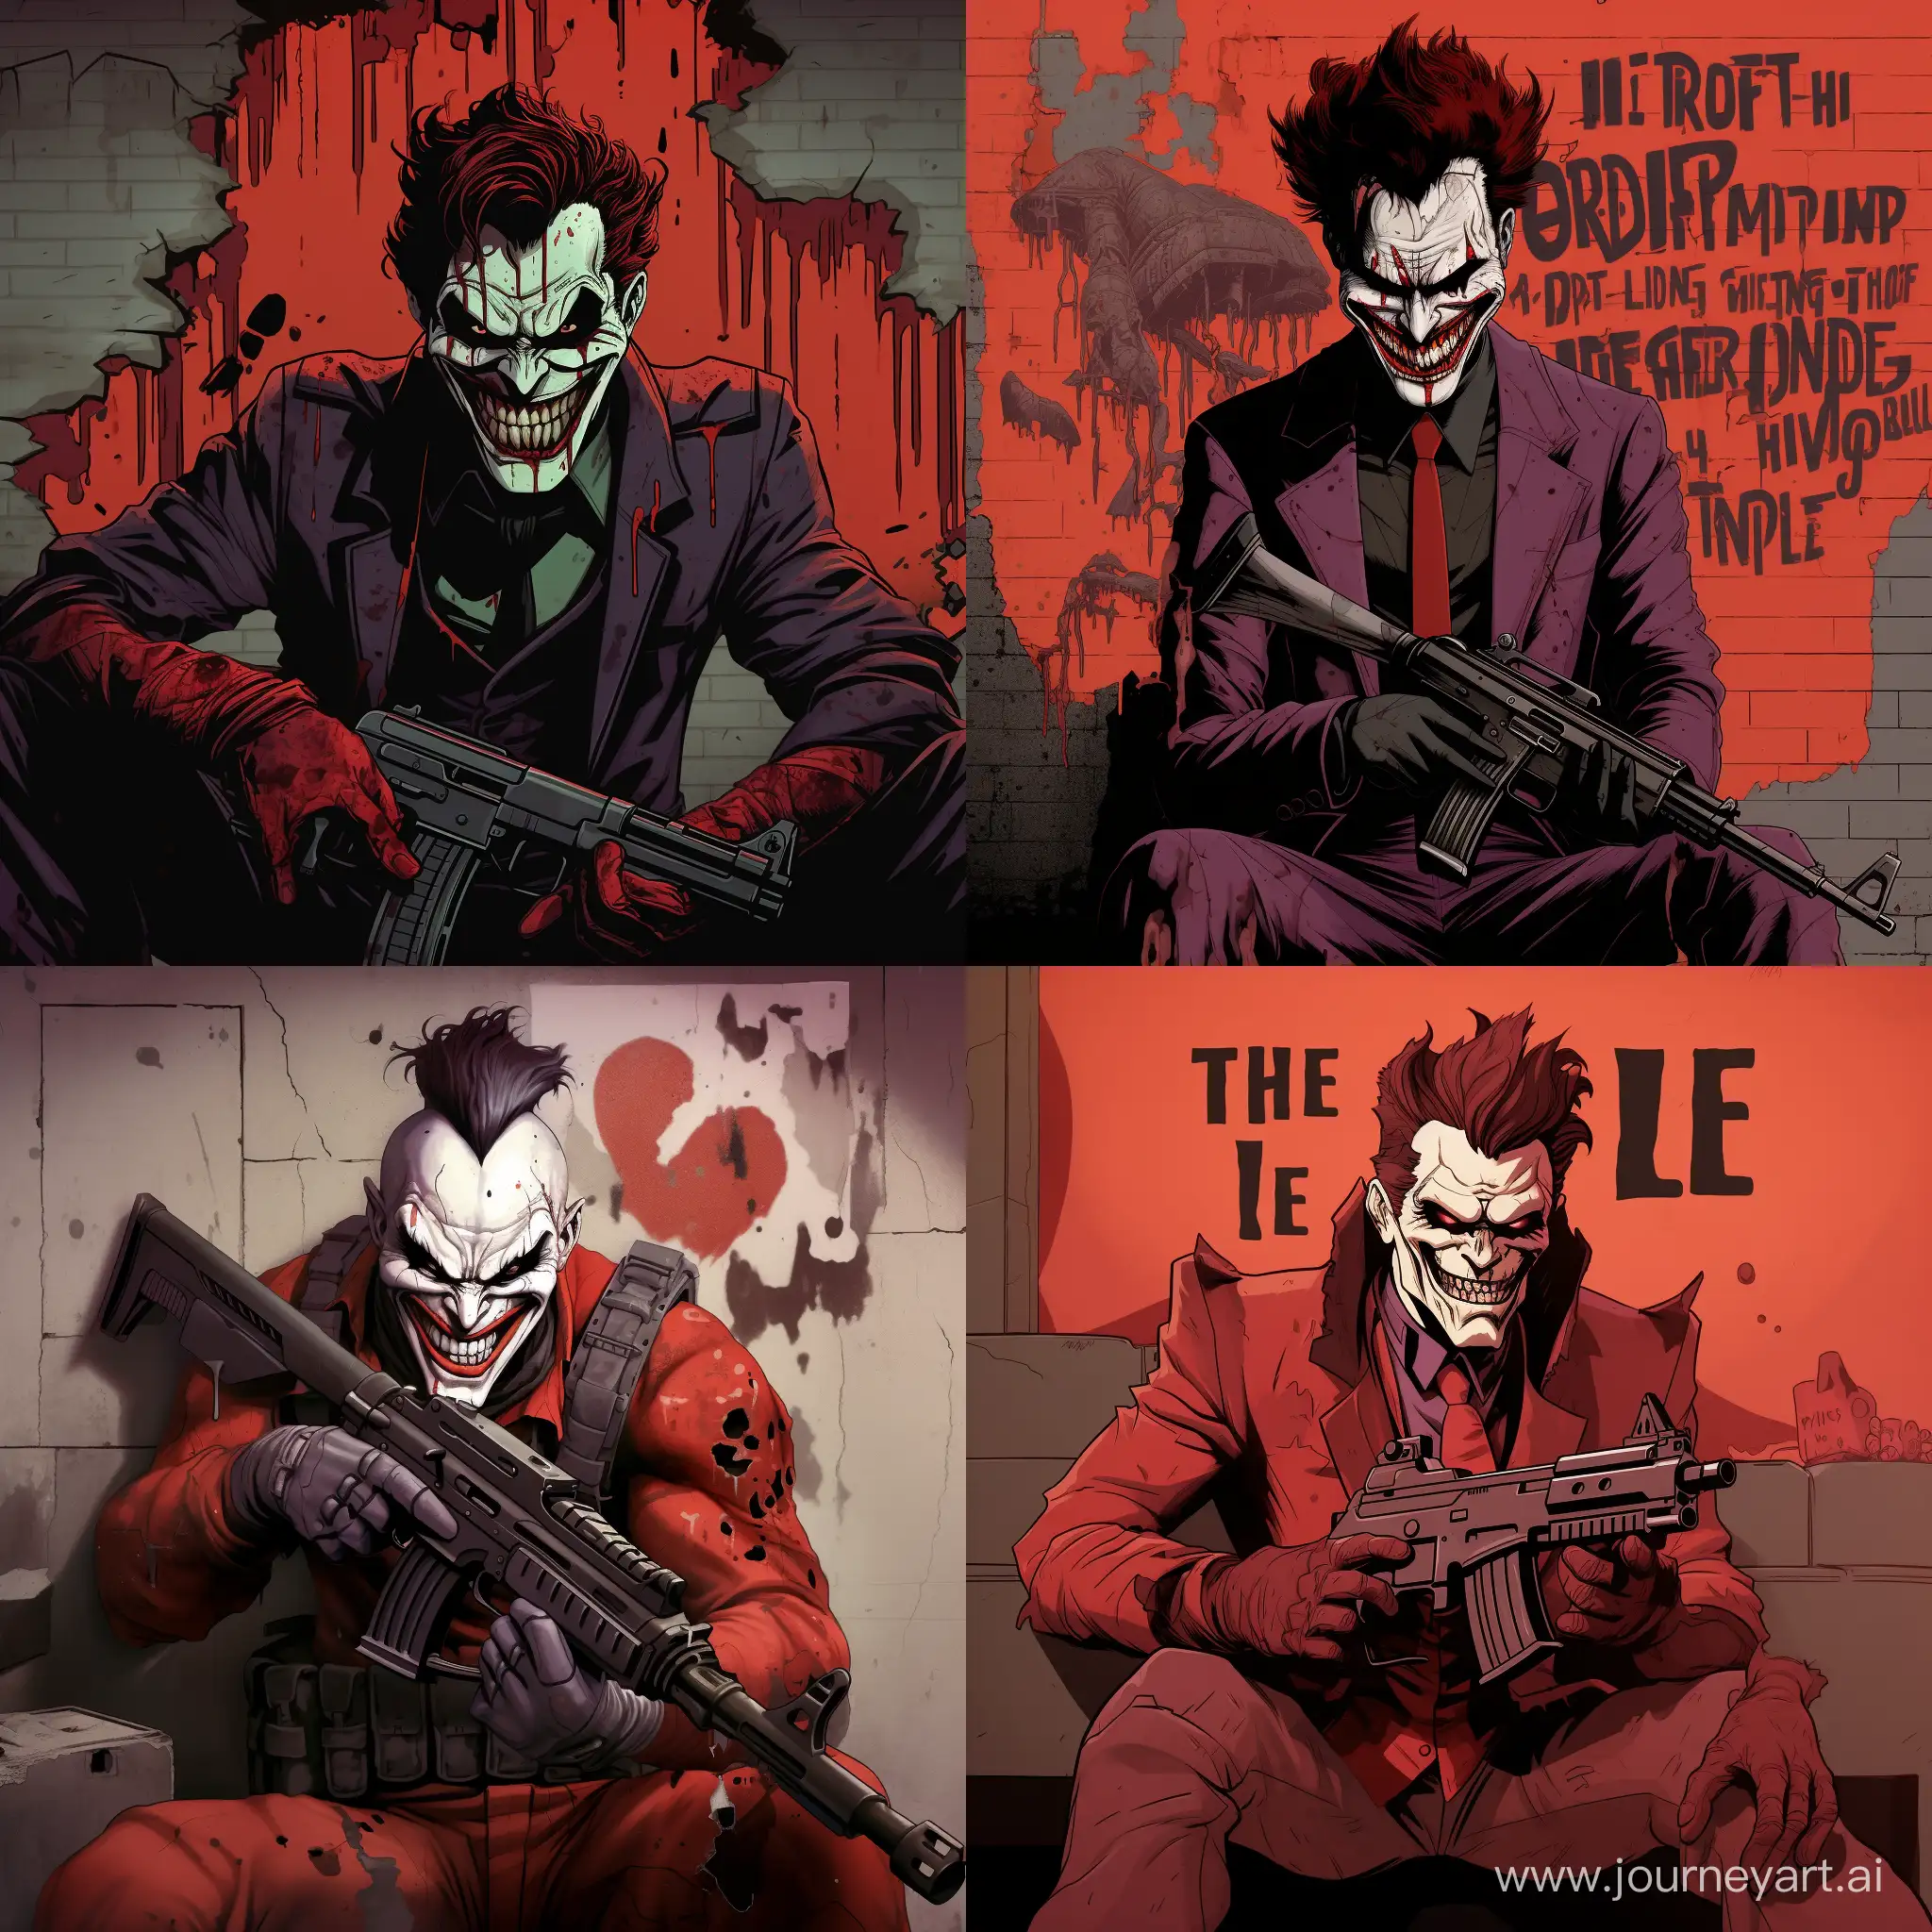 Sinister-Joker-Behind-RedWalled-Chaos